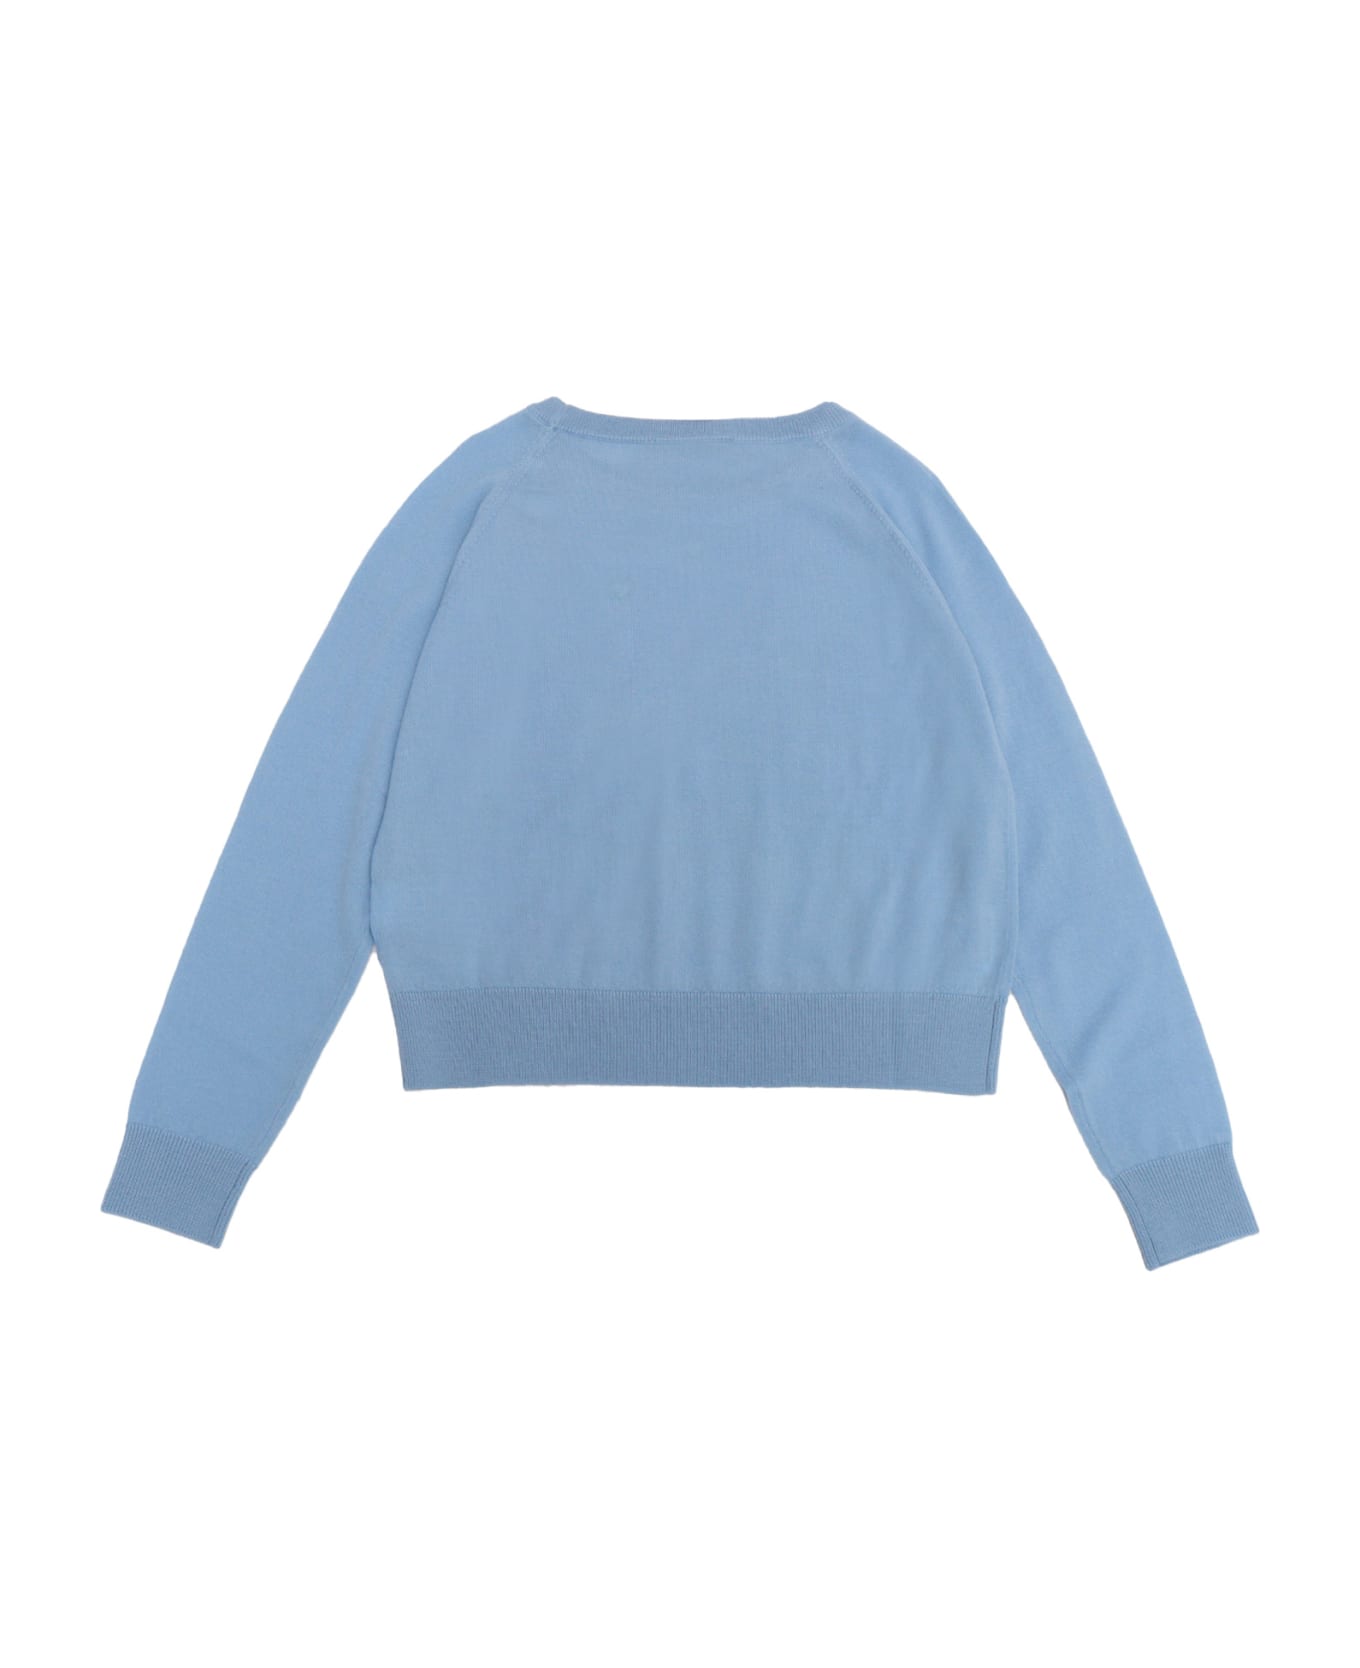 Max&Co. Light Blue Sweater - LIGHT BLUE